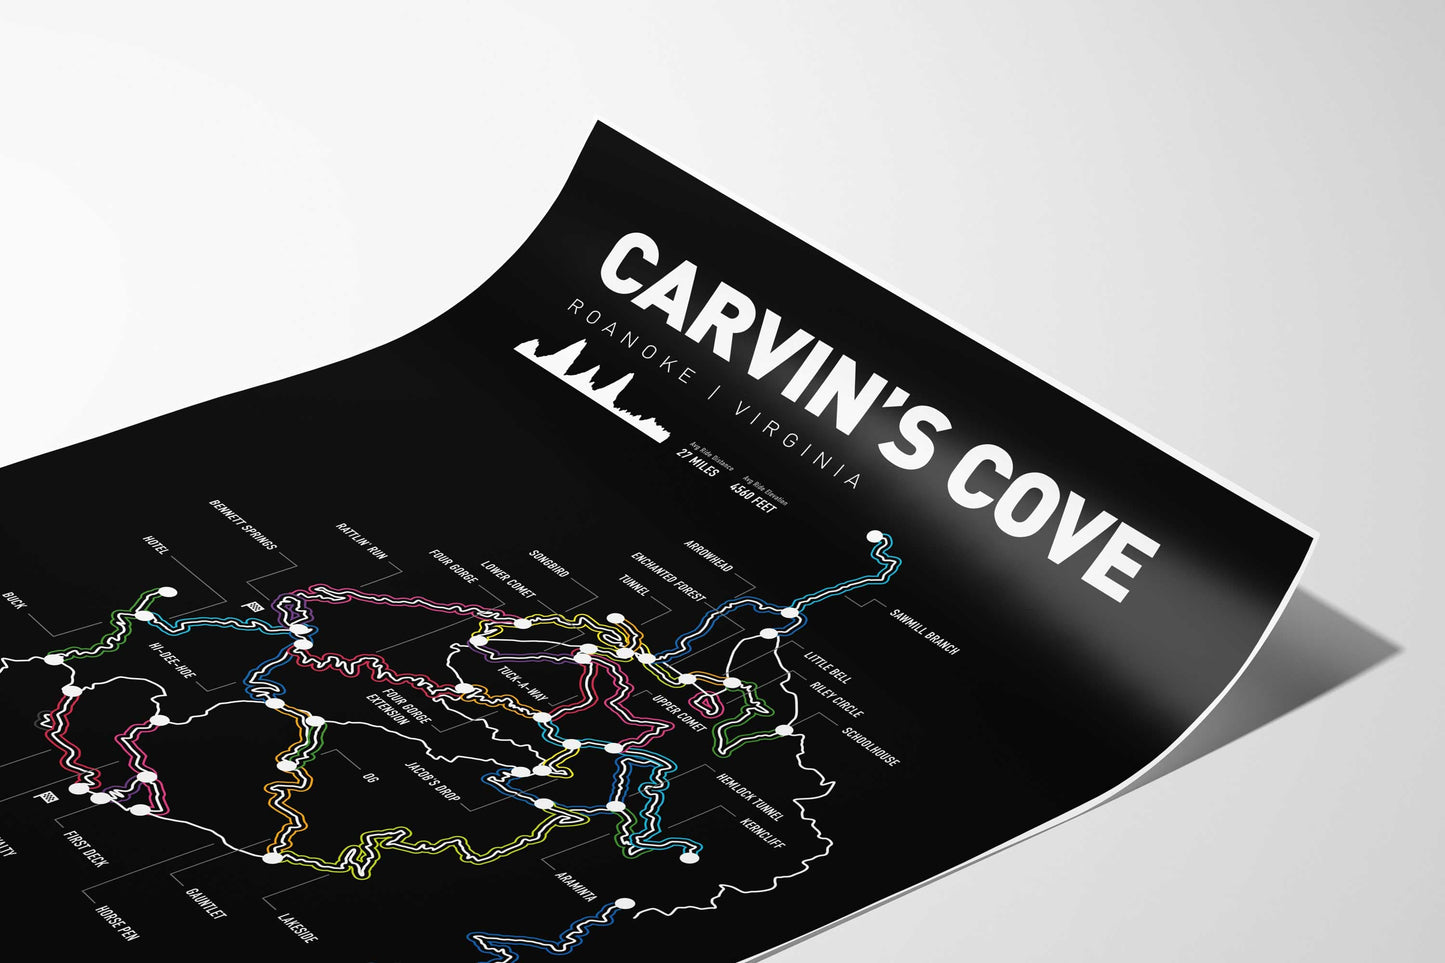 Carvins Cove Virginia Mountainbike Kunstdruck